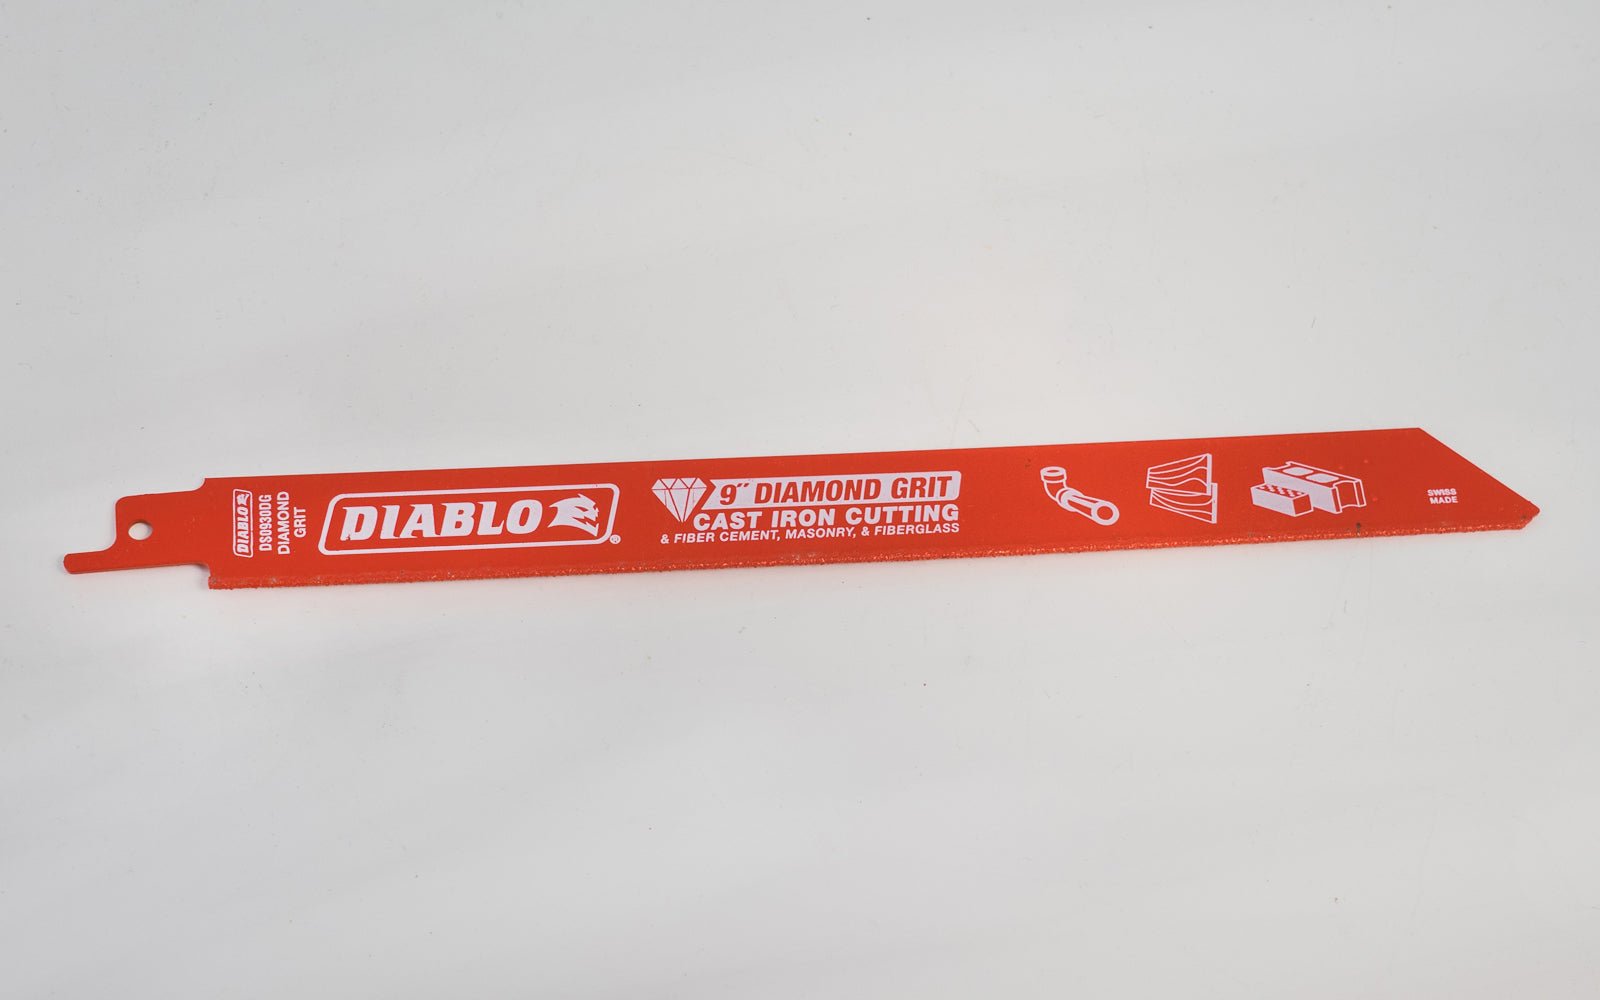 Diablo 9" Diamond Grit Reciprocating Saw Blade. Model DS0930DG. Swiss made.